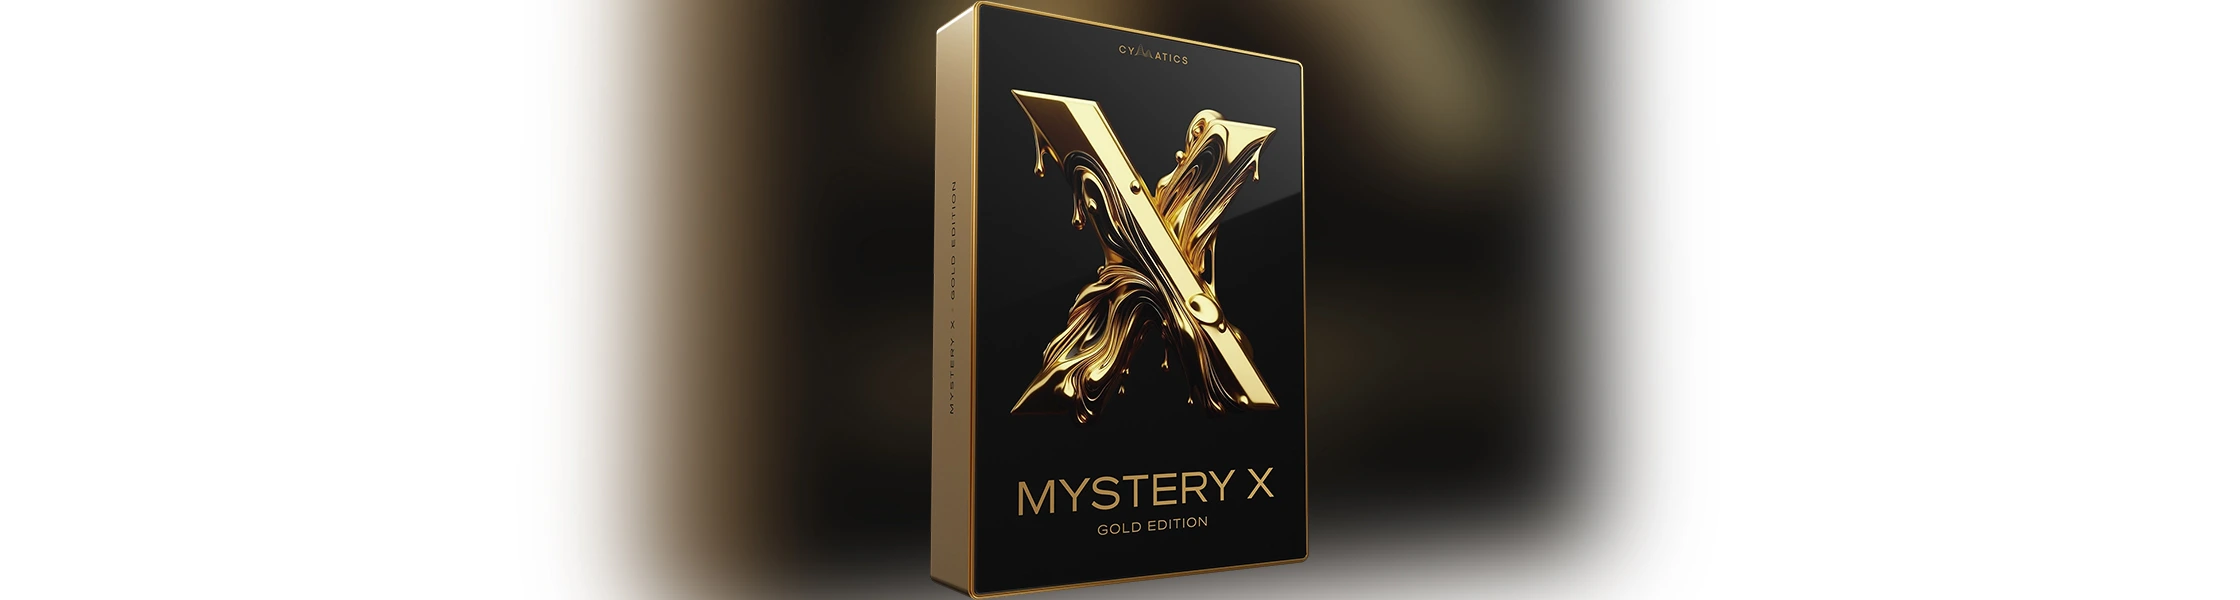 Cymatics Mystery Vol X - GOLD